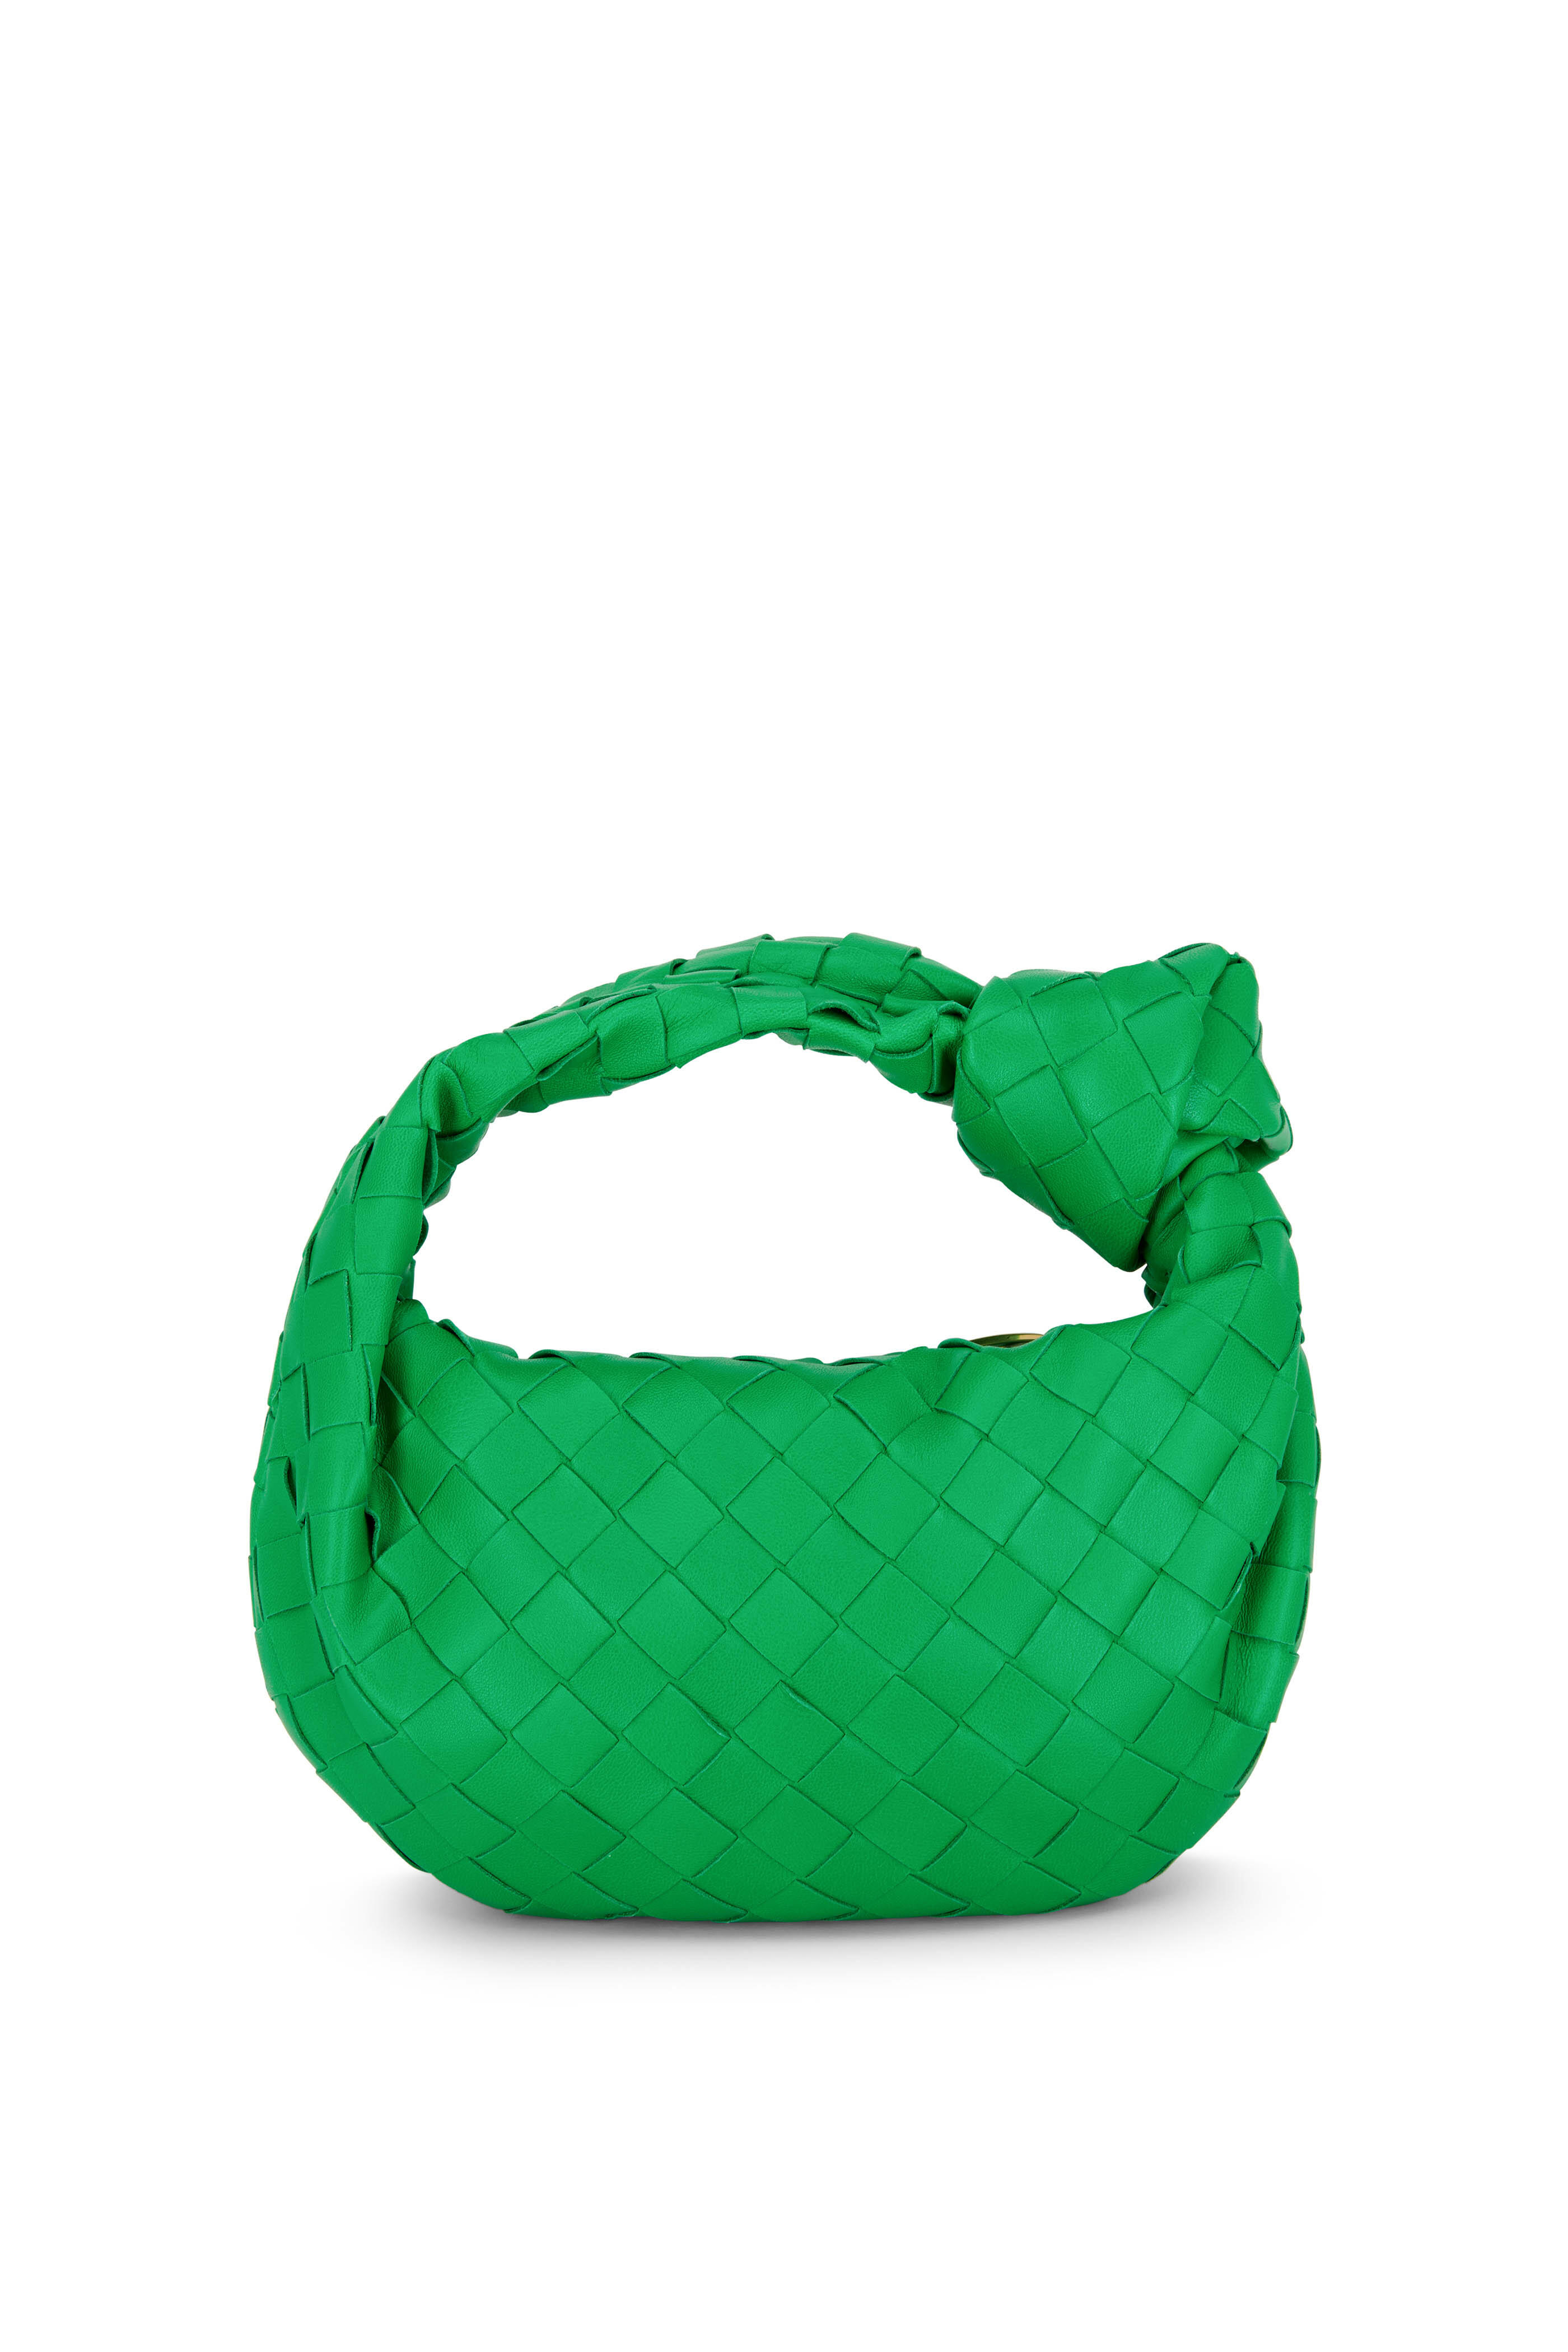 Candy Jodie Leather Shoulder Bag in Green - Bottega Veneta